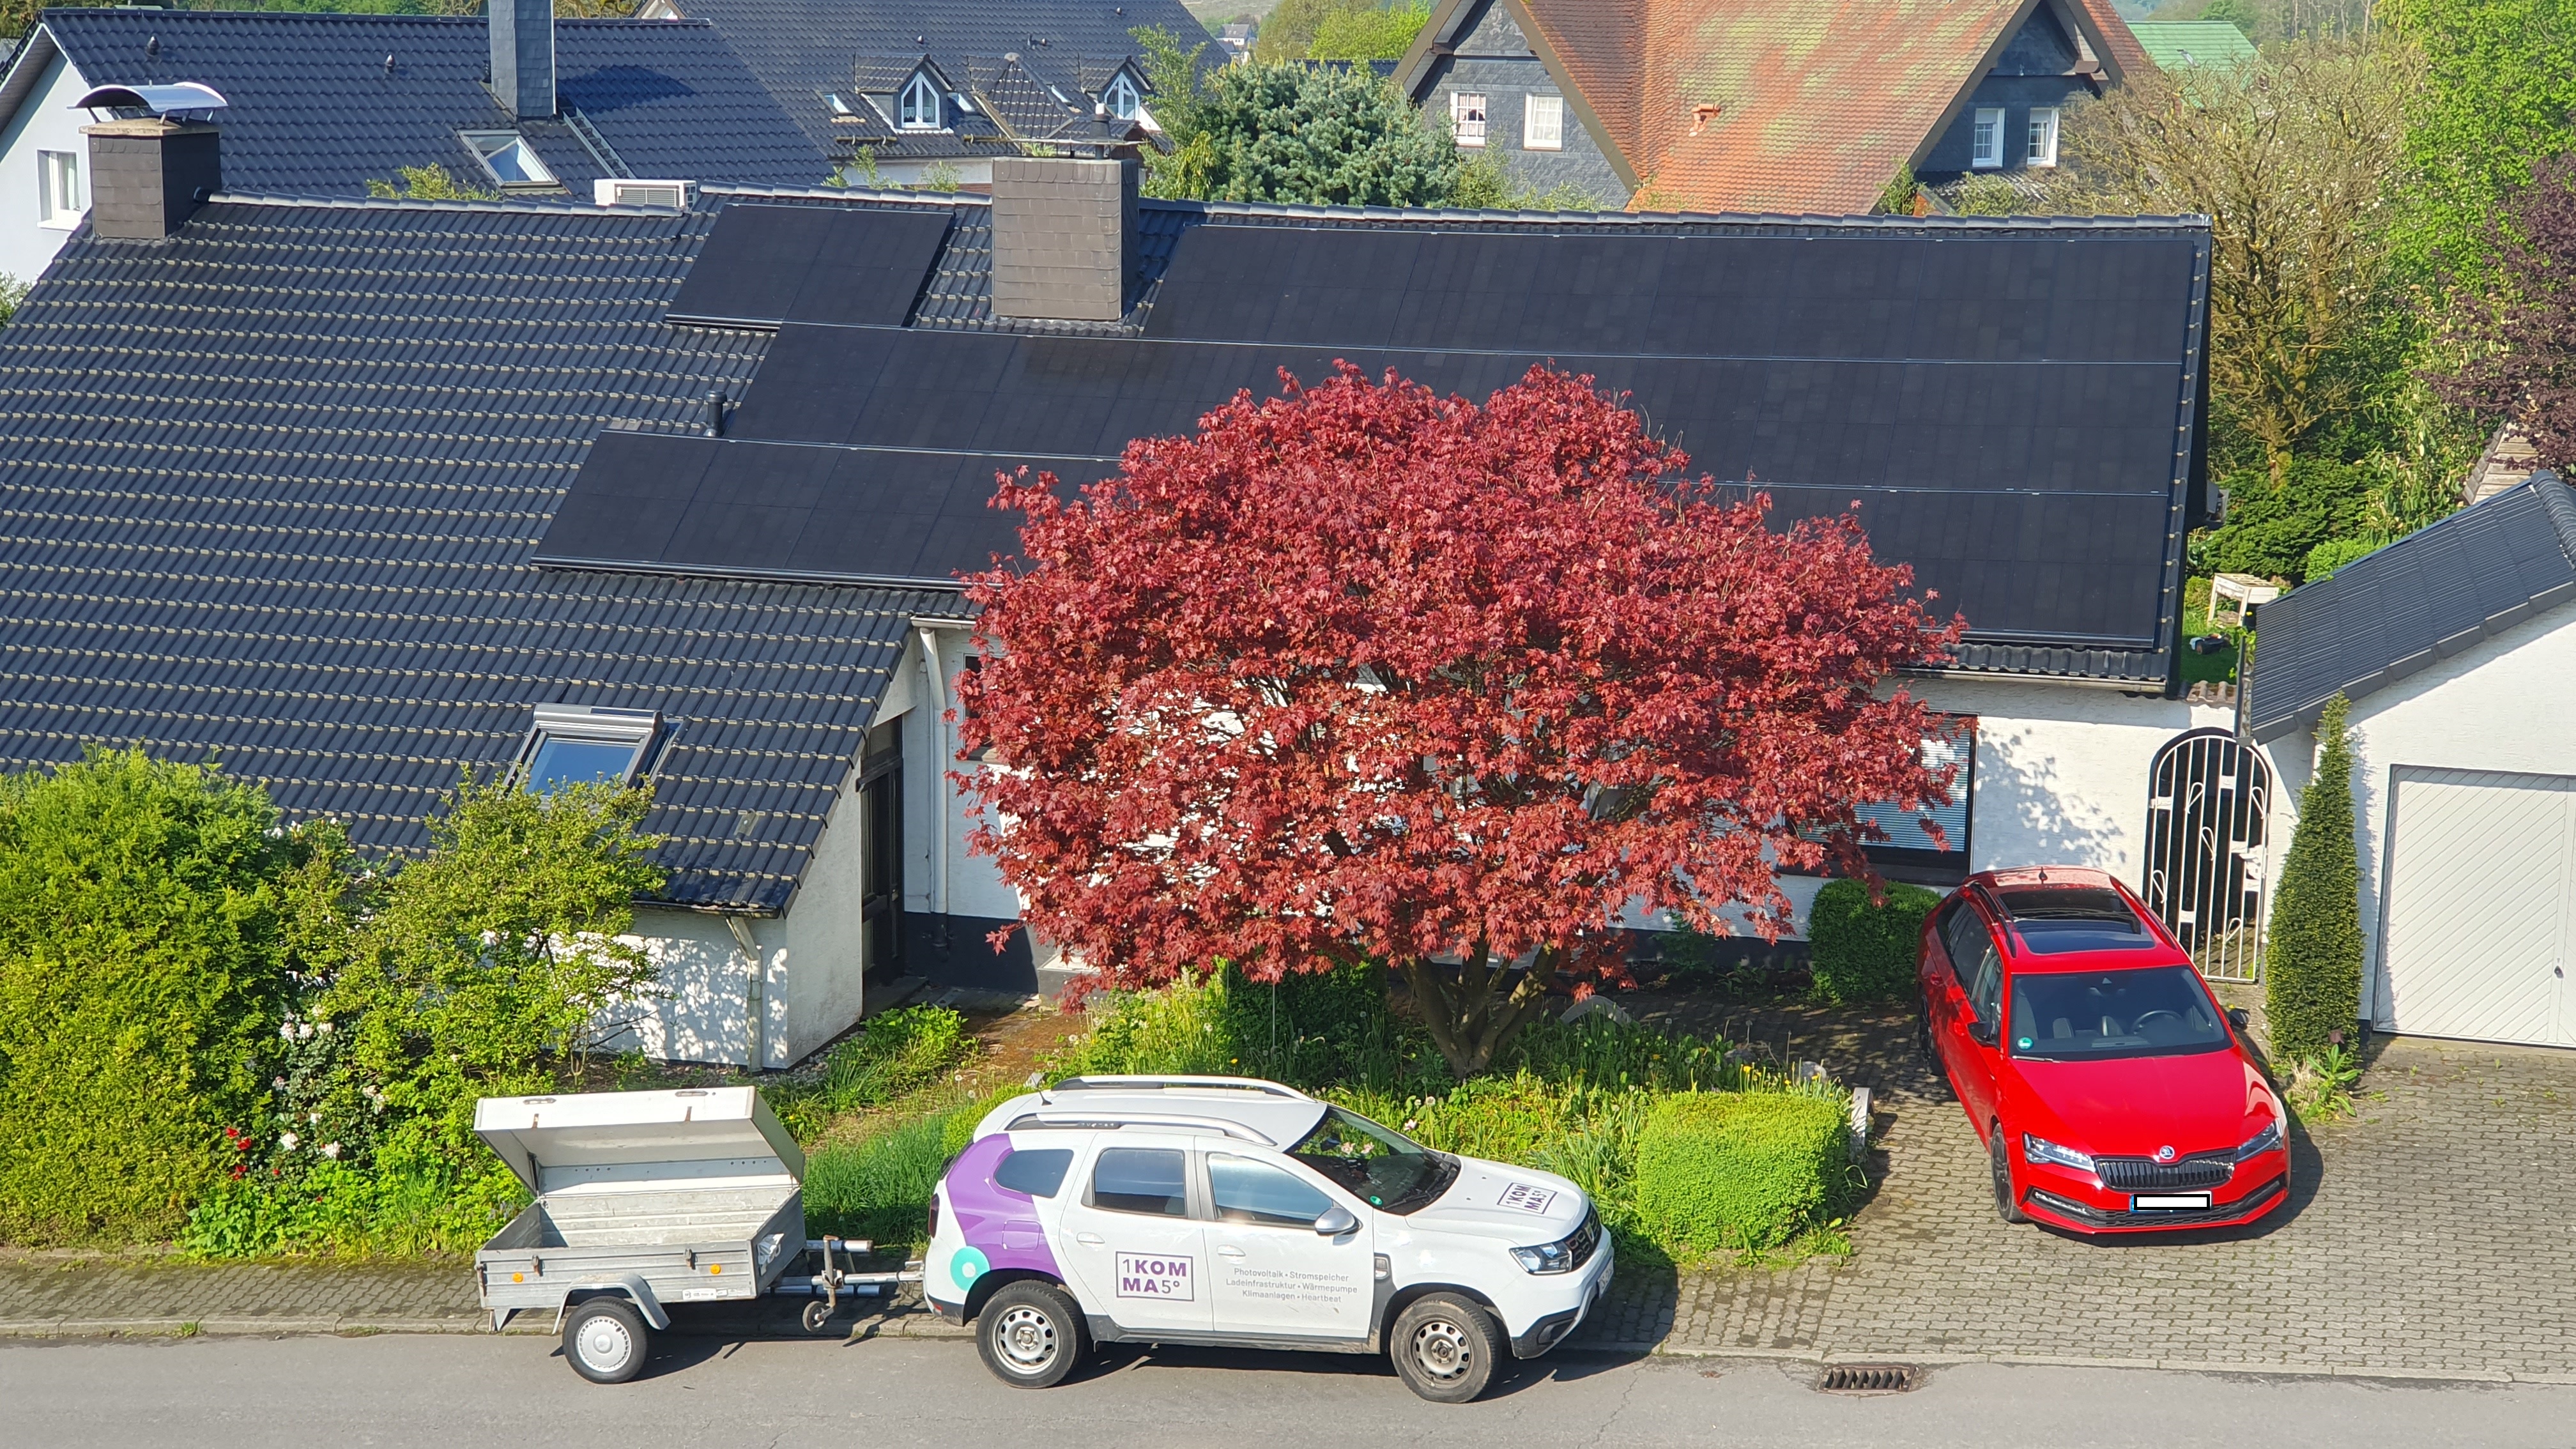 Bild 1 1KOMMA5° Kierspe: Meisterbetrieb für Photovoltaik, Solaranlagen & Wärmepumpen in Kierspe